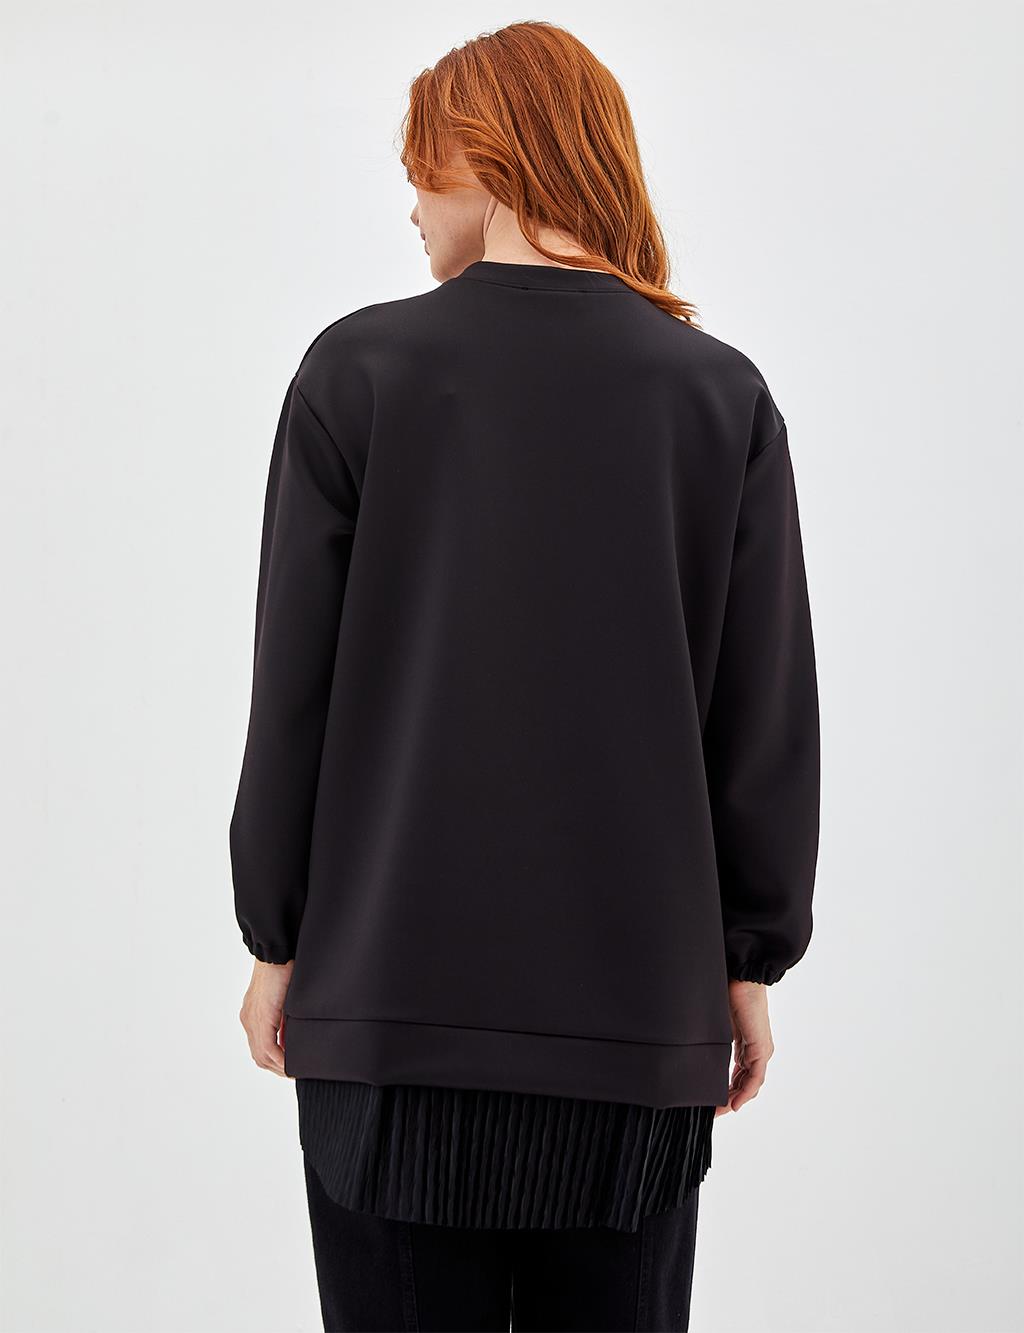 Embroidered Pocket Detailed Sweatshirt Black